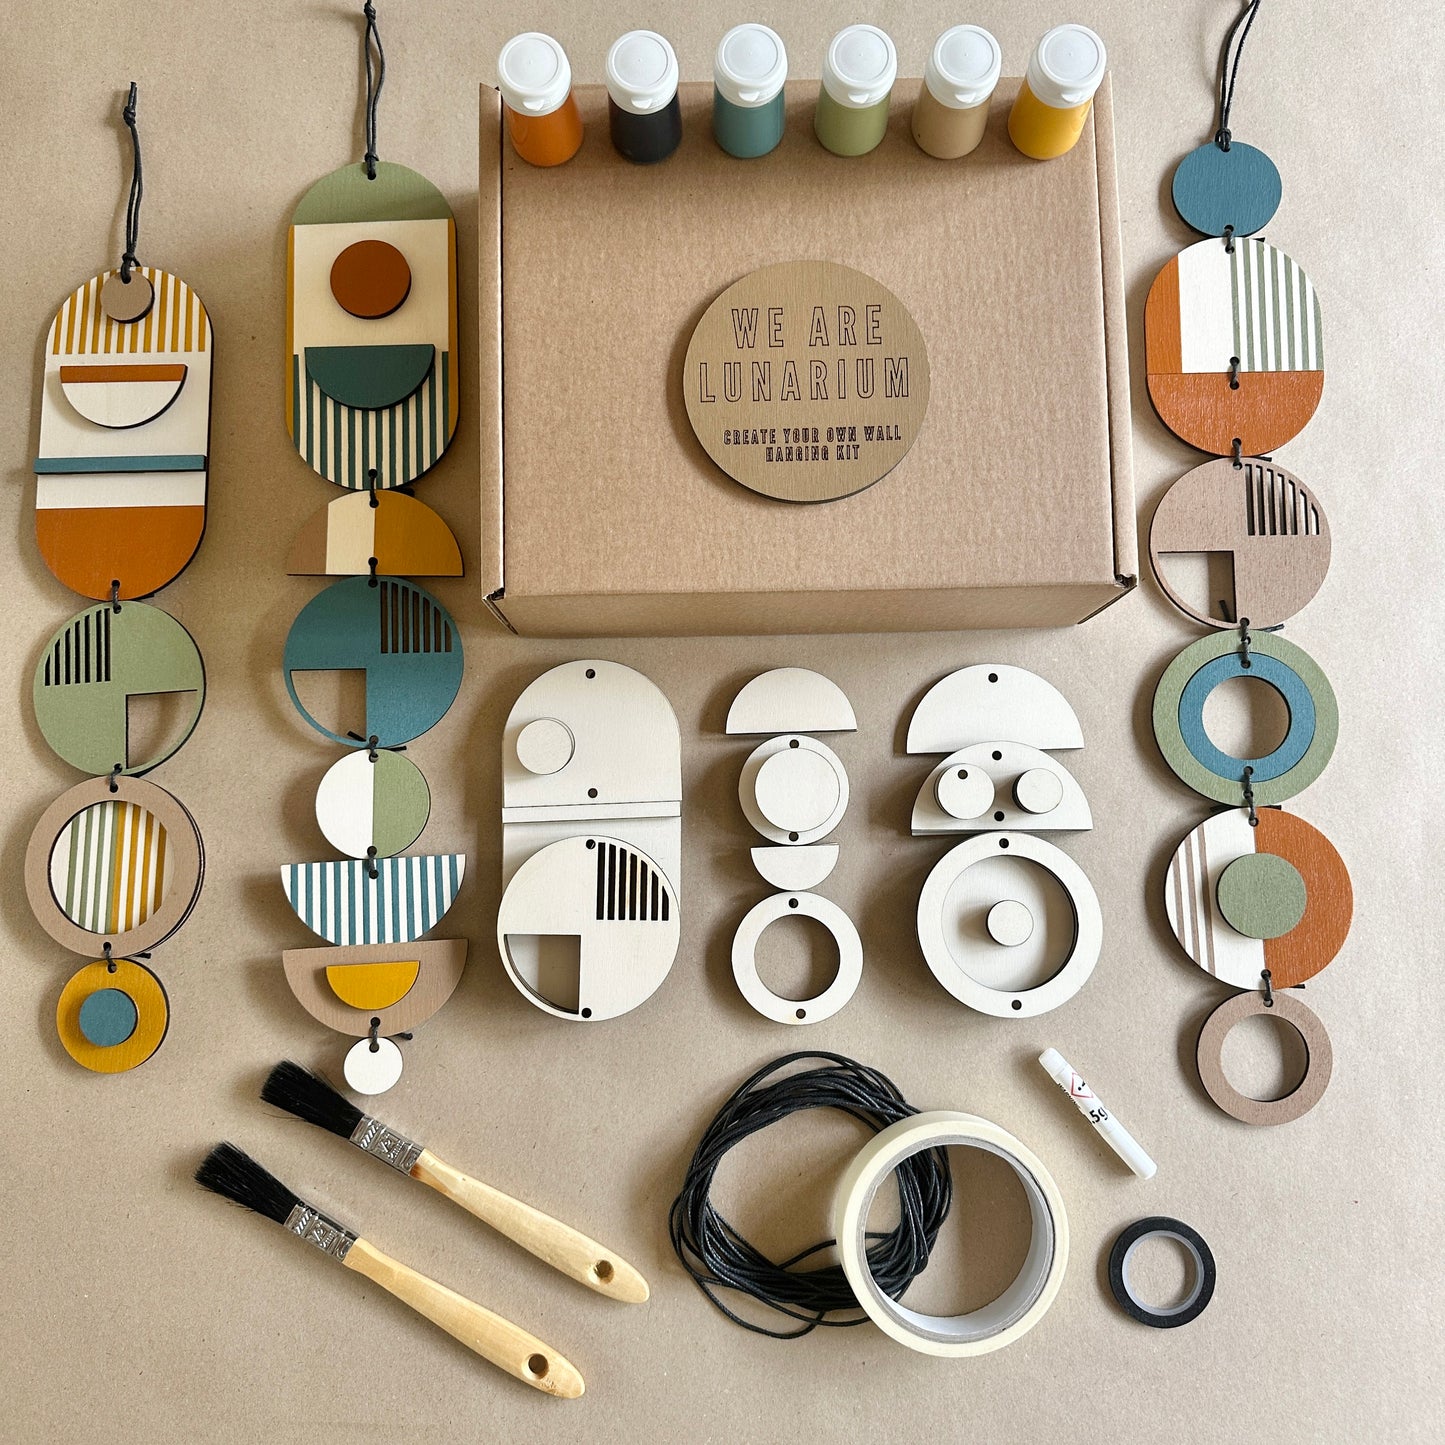 Original Artisan Craft Make Your Own Wall Hanging Kit: Unleash Your Creativity